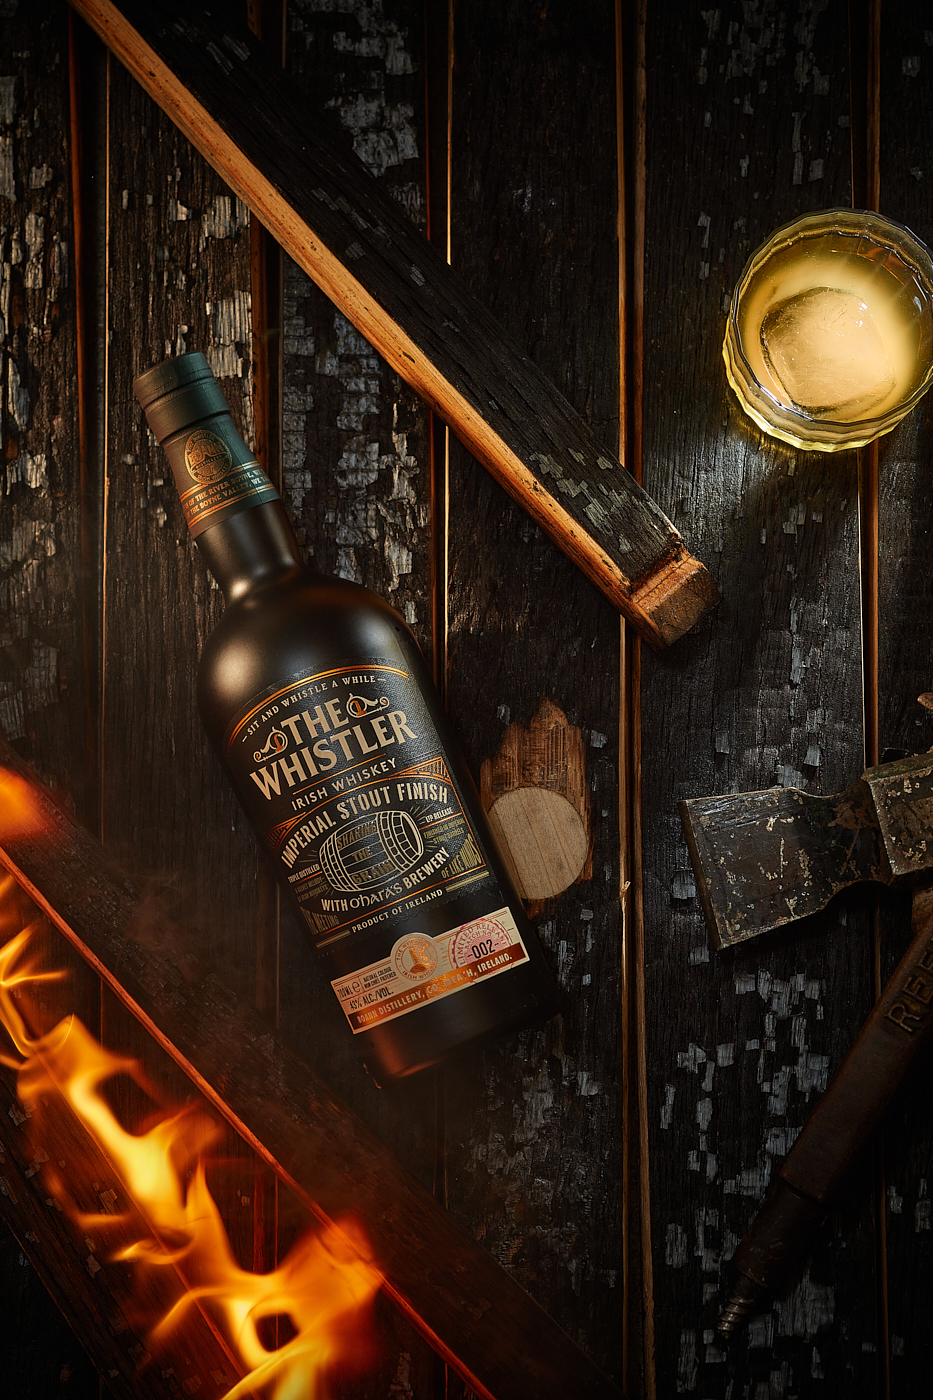 Drinks Photography Ireland - Whiskey Bottle on charred staves